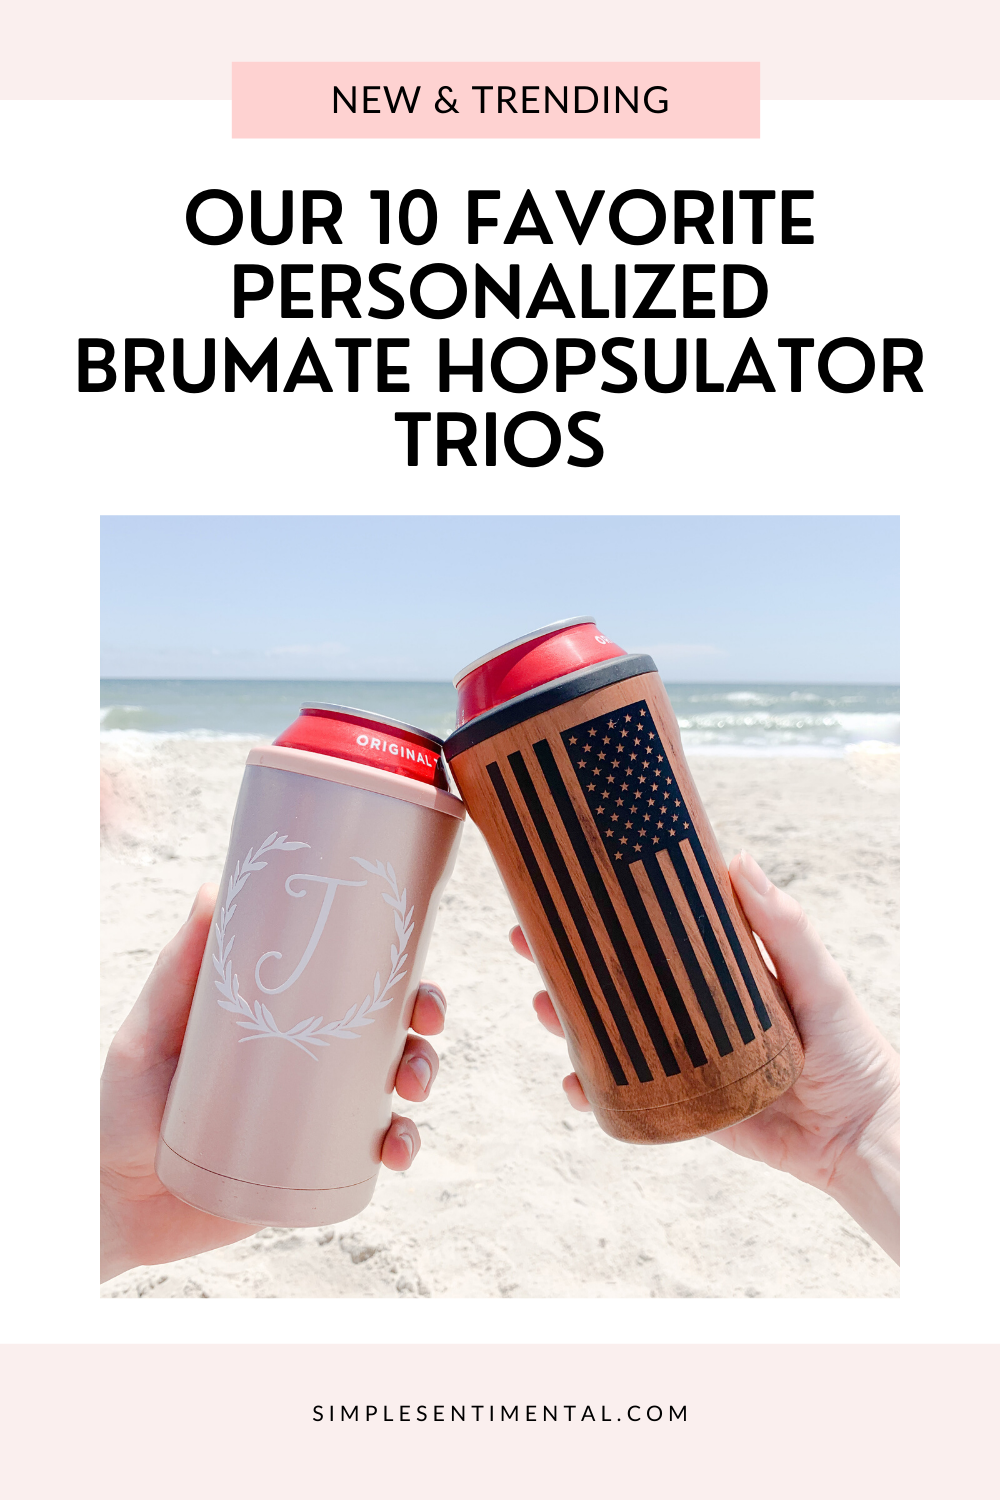 Personalized Brumate, Custom Brumate, Corporate Gift, Personalized